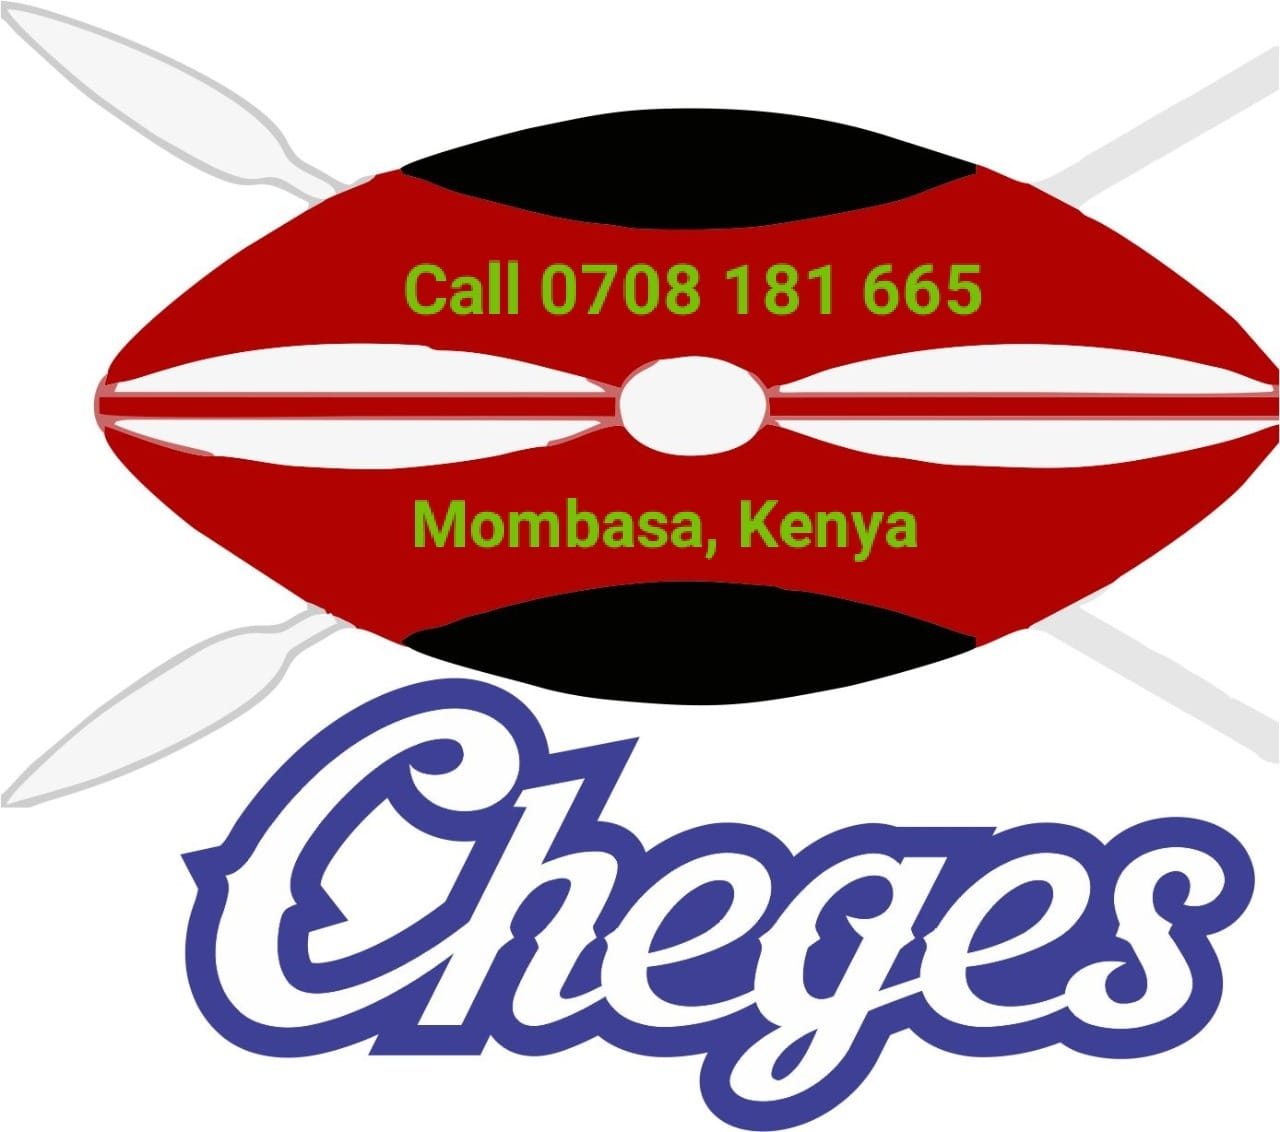 Cheges Mombasa Branding Companies Agencies. Call 0708181665